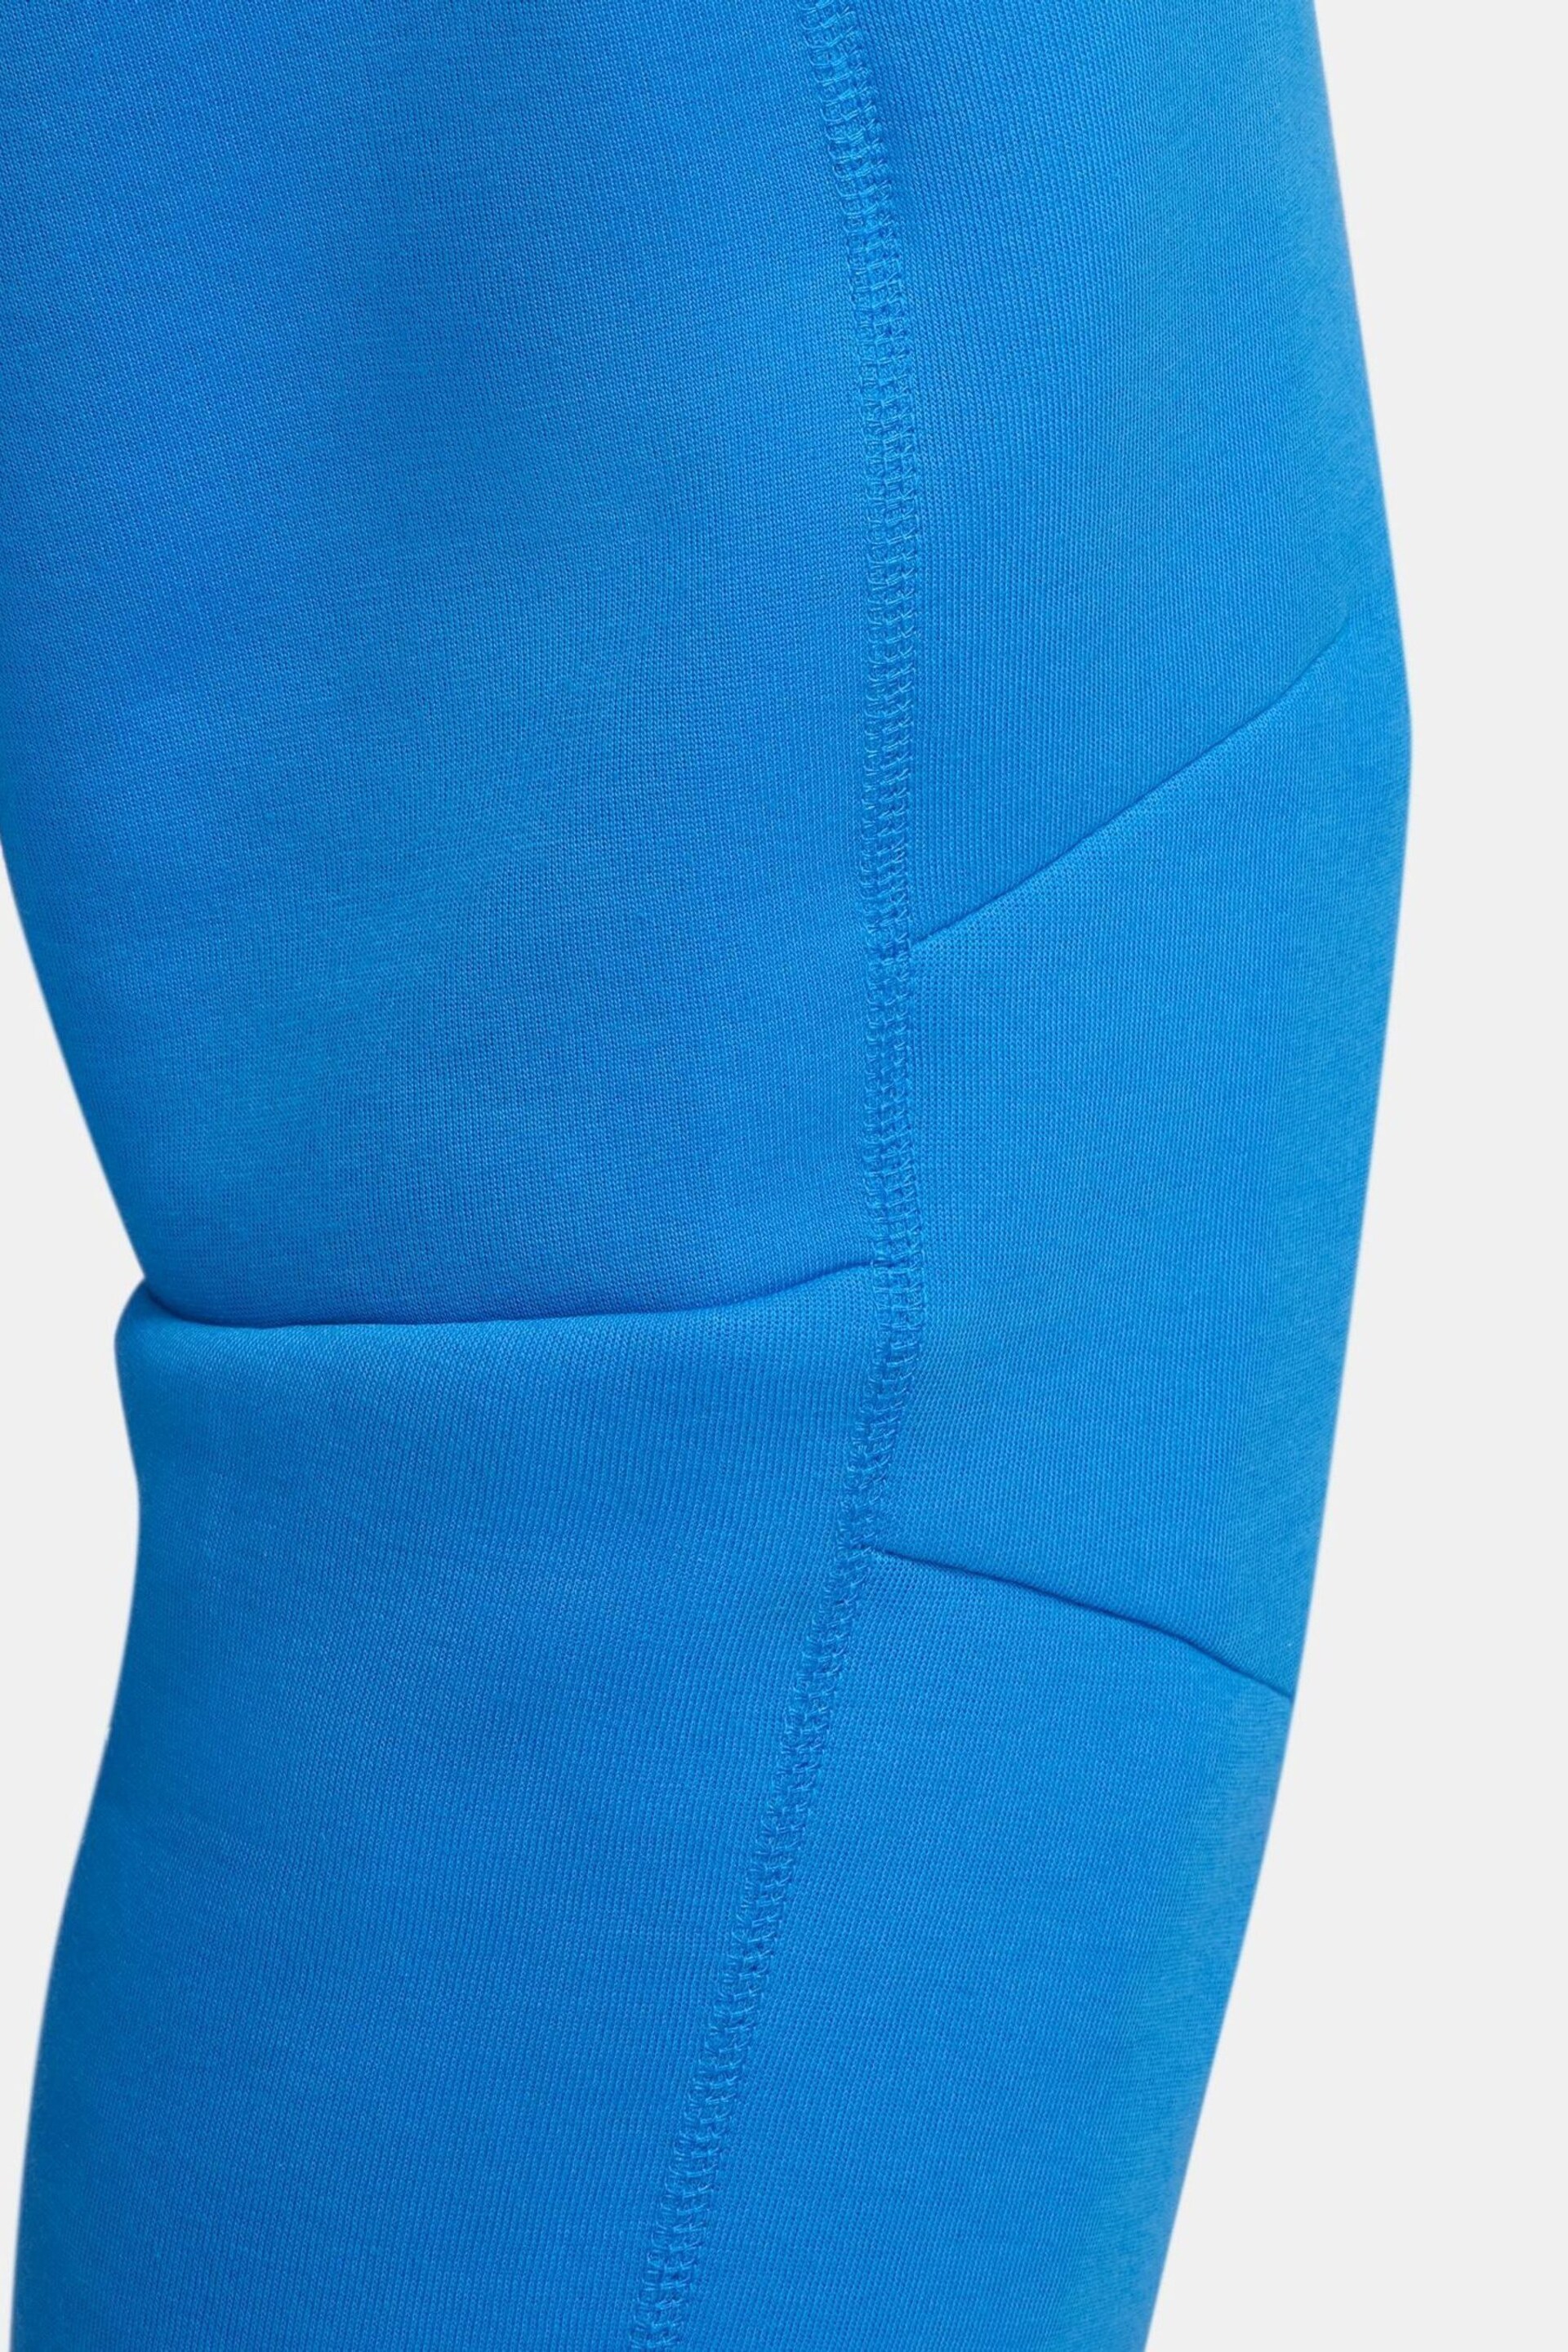 Nike Blue Tech Fleece Joggers - Image 6 of 11